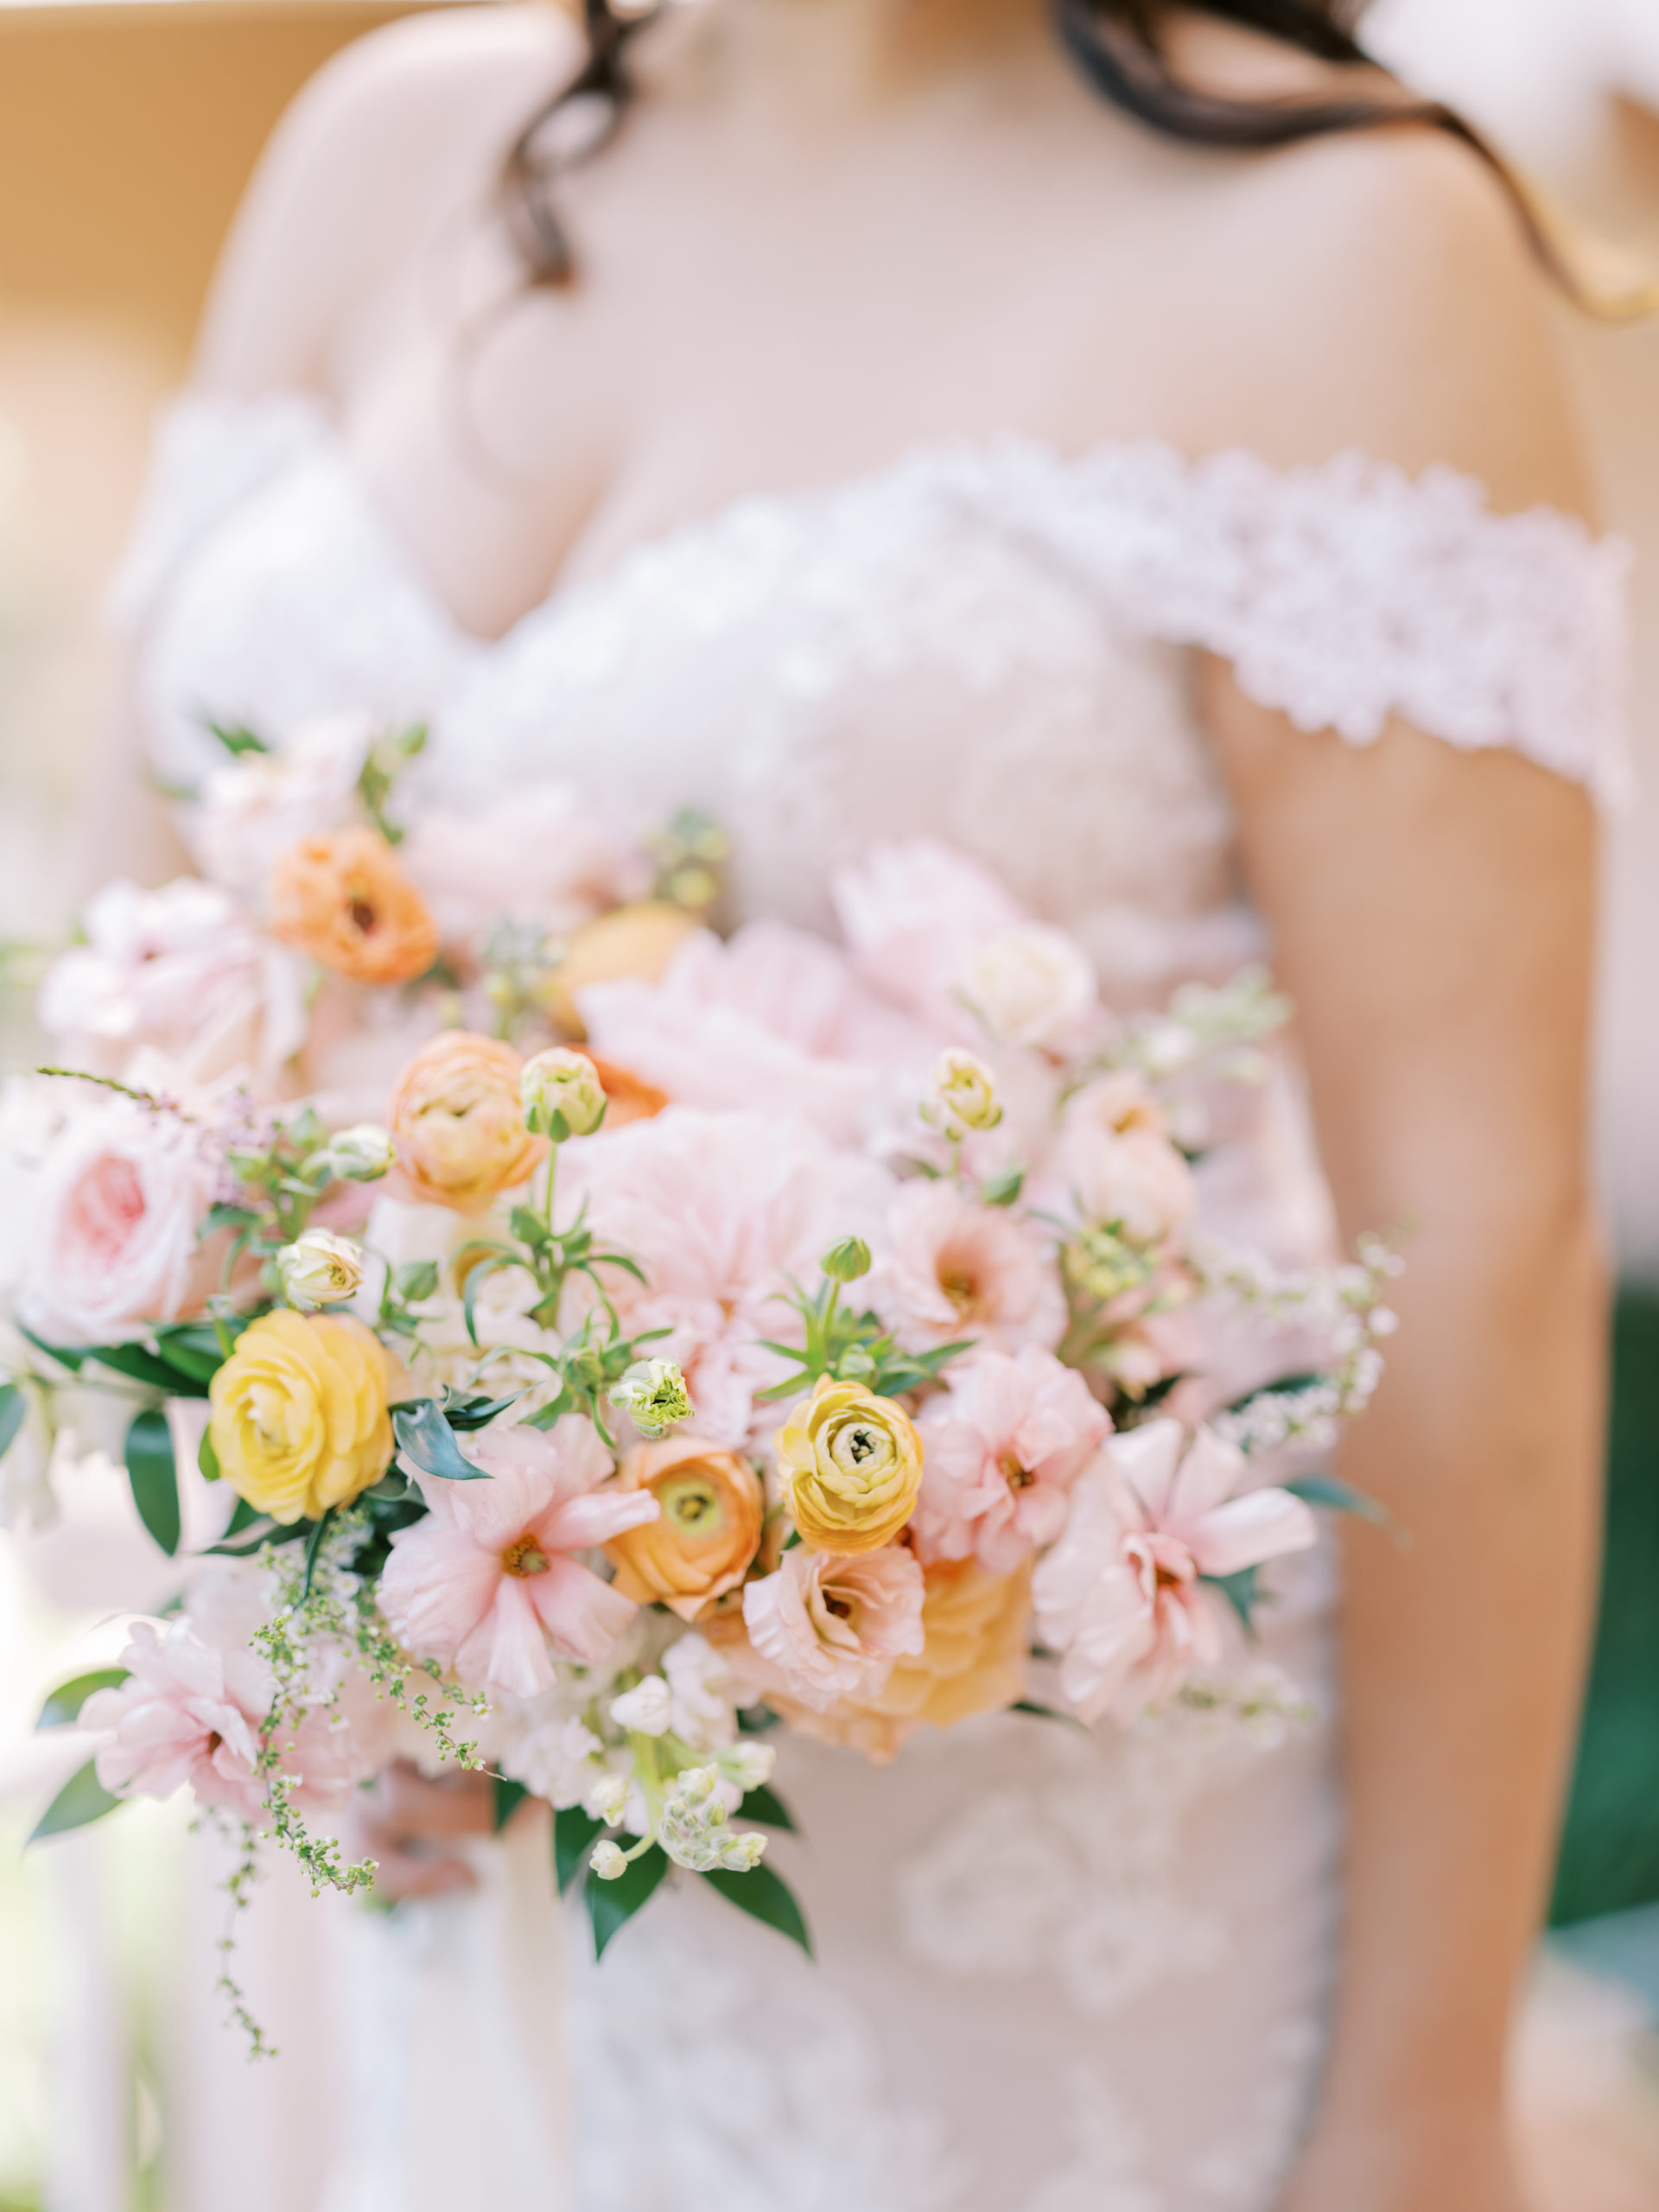 Wedding Bouquet by Leah Mai photographed by Mirelle Carmichael